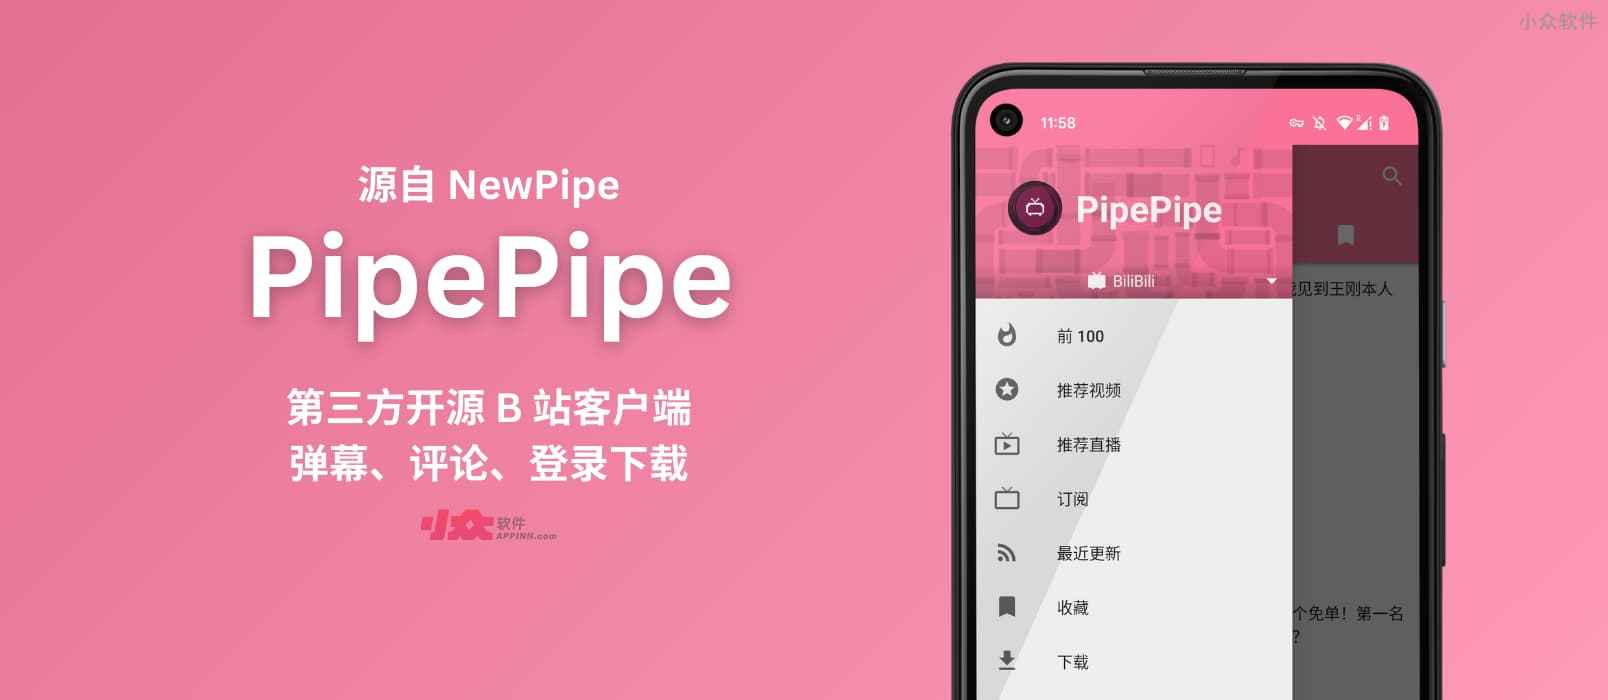 PipePipe – 第三方开源 B 站 Android 客户端，支持弹幕、评论、登录下载｜原自 NewPipe